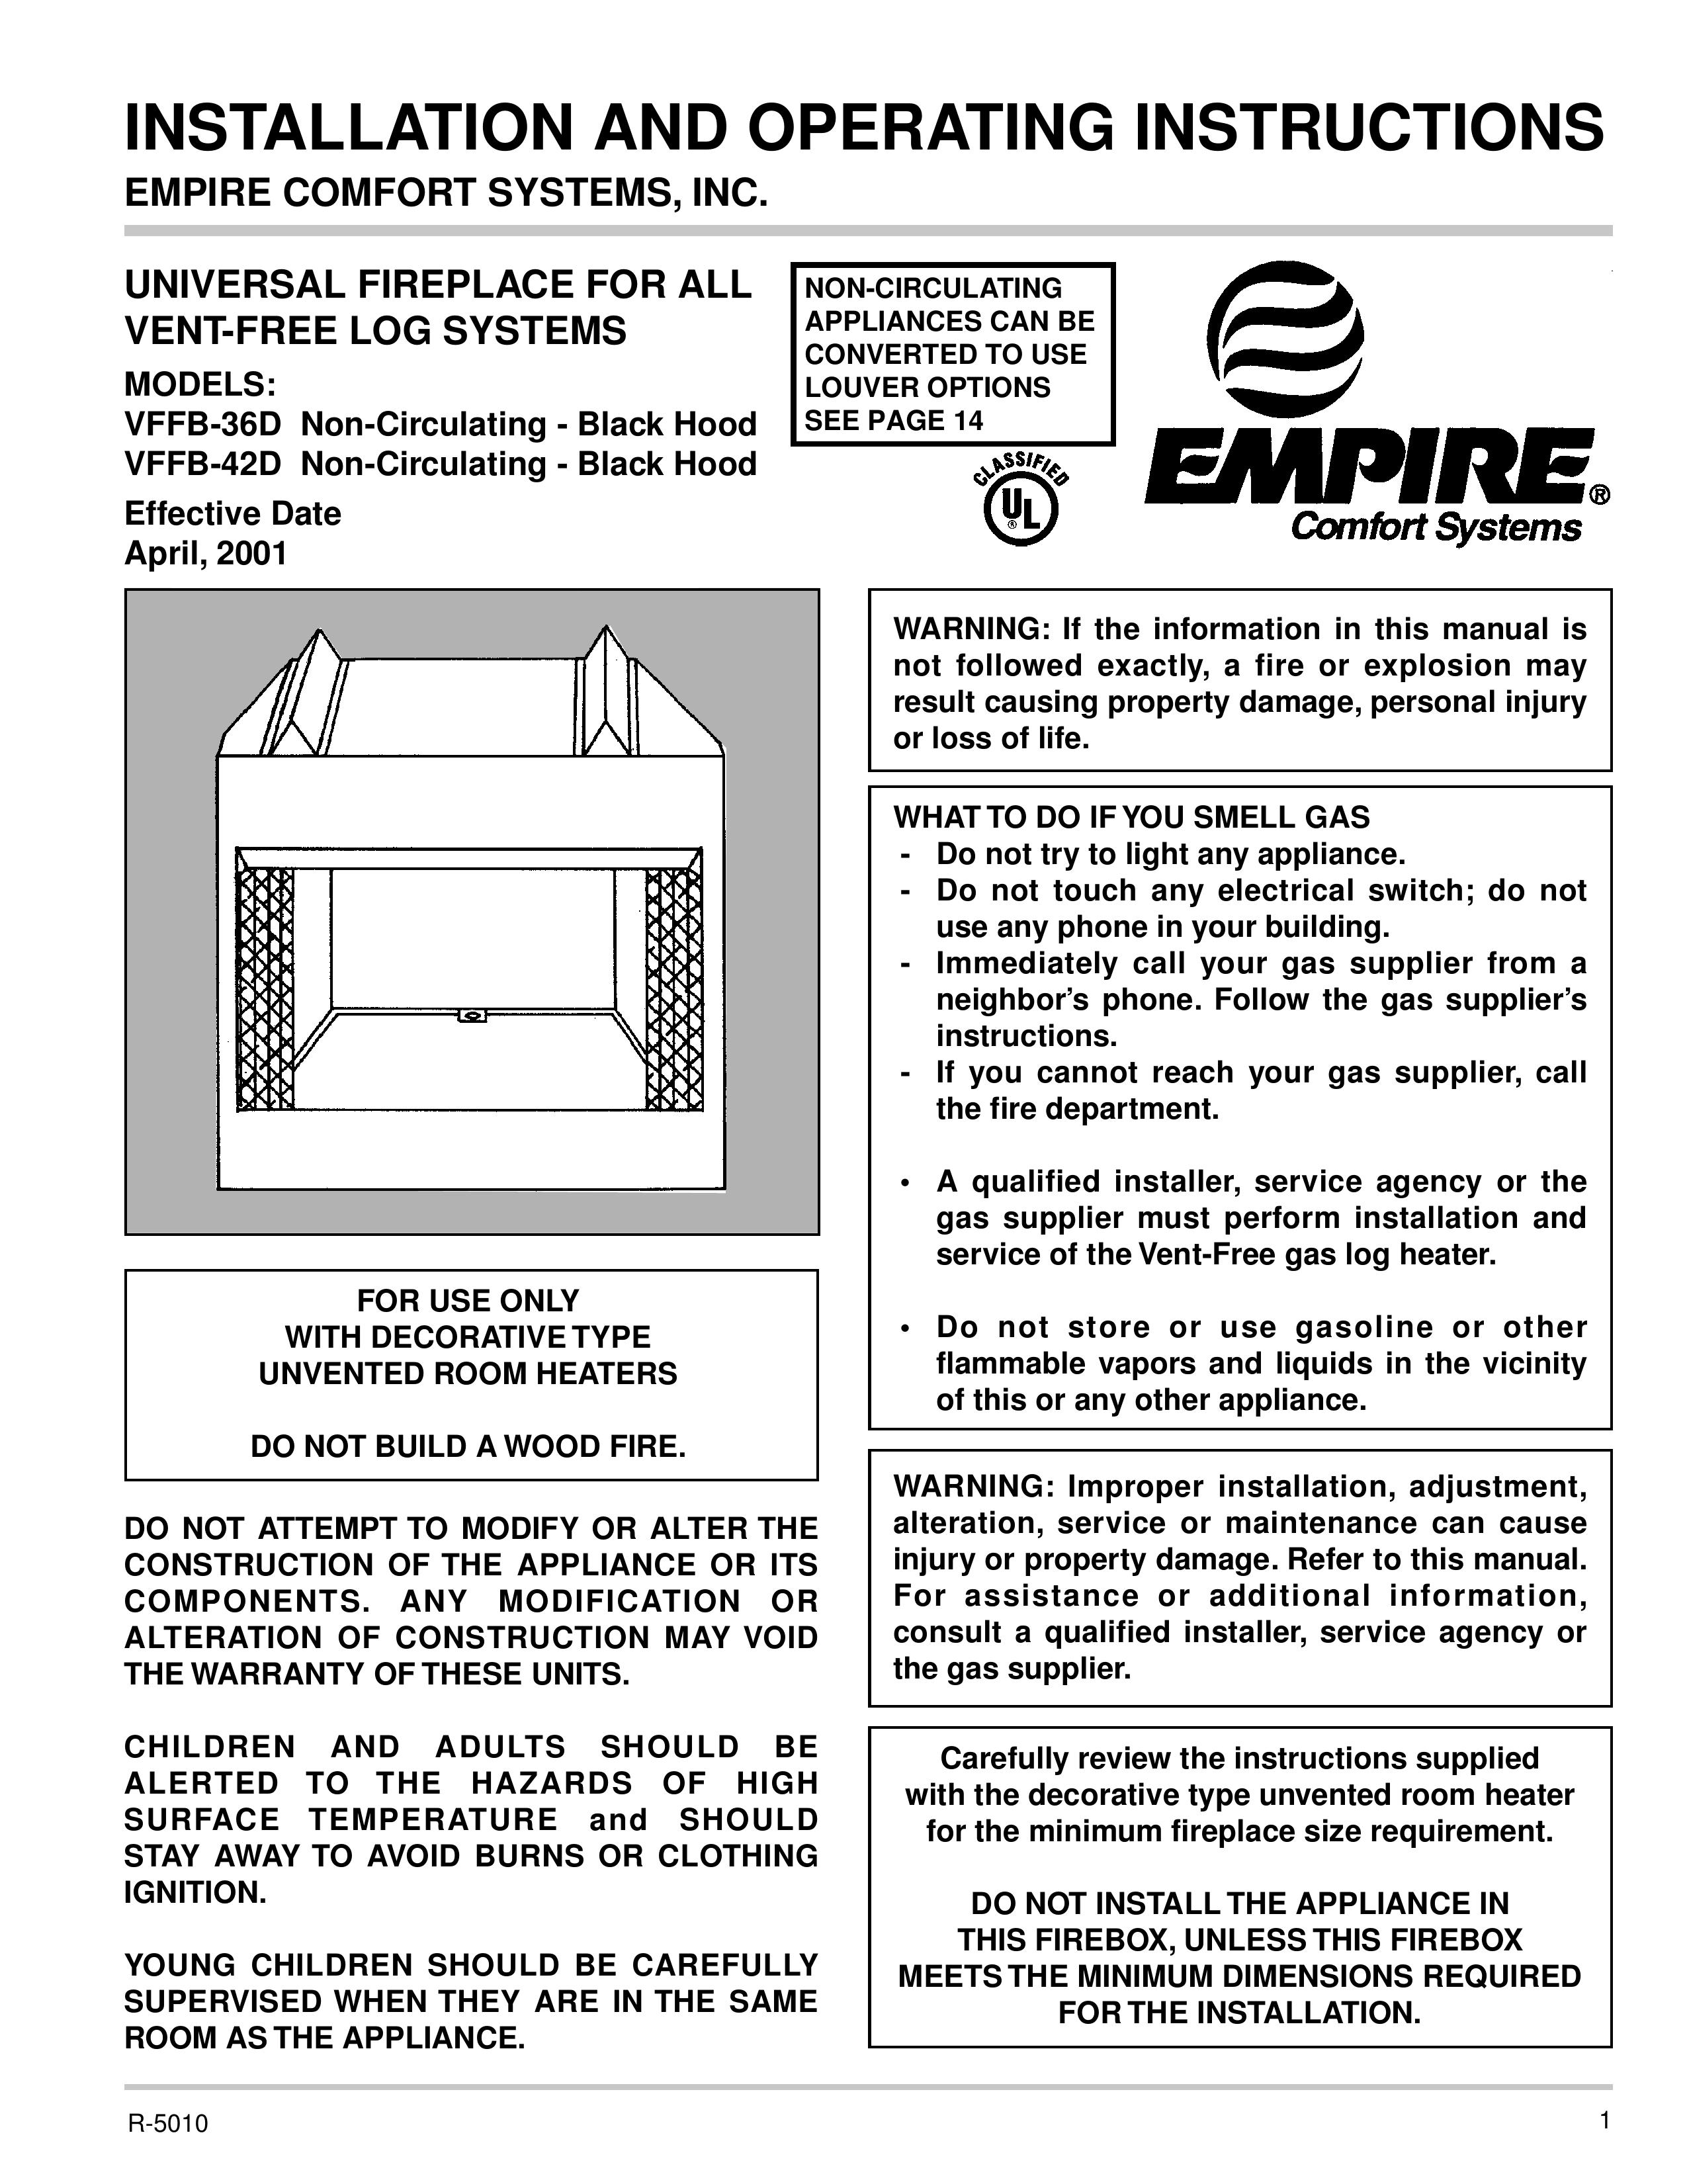 Empire Comfort Systems VFFB-42D Ventilation Hood User Manual